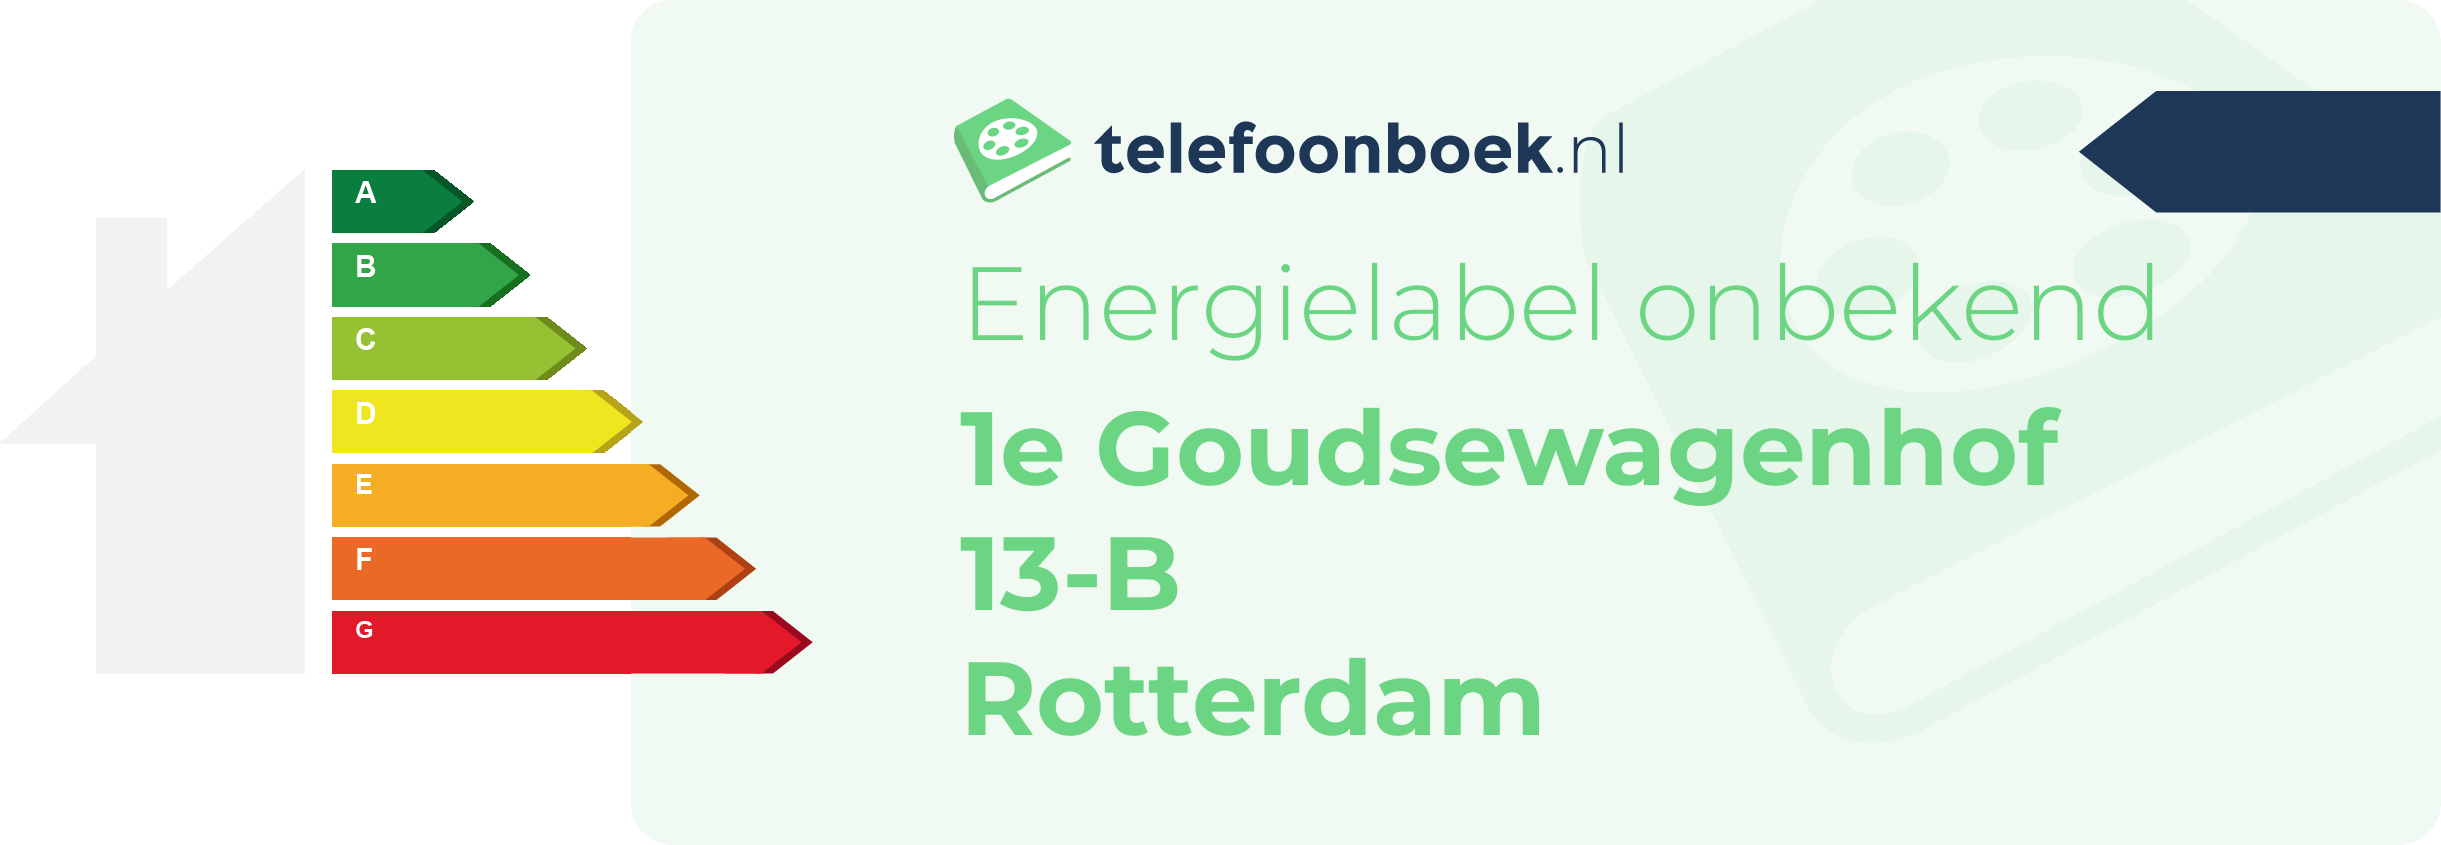 Energielabel 1e Goudsewagenhof 13-B Rotterdam